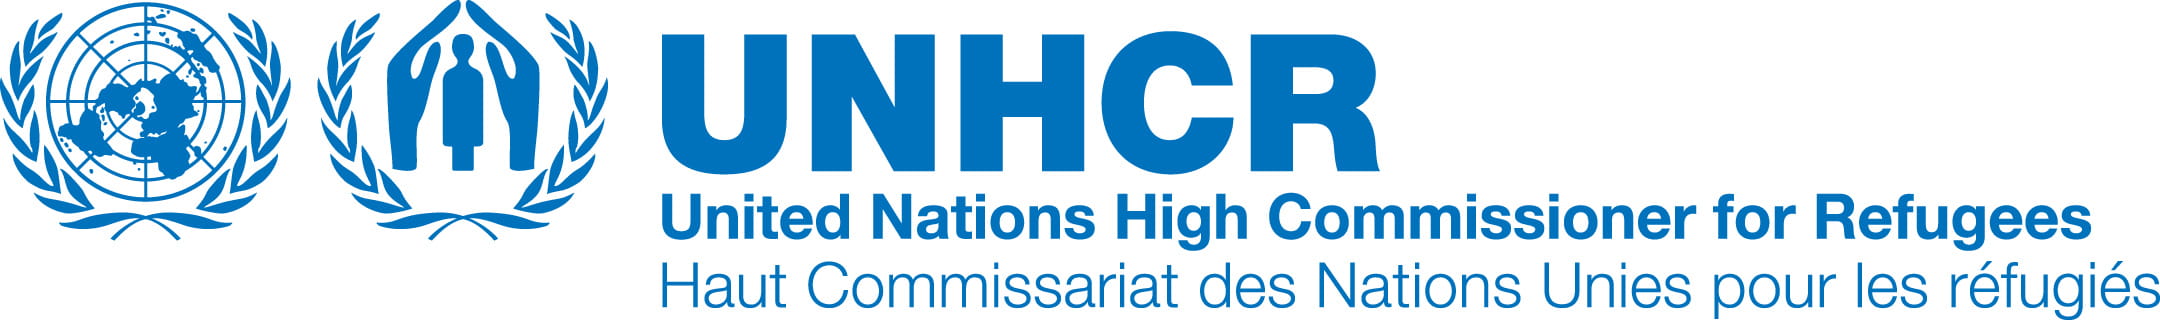 White and blue UNHCR logo